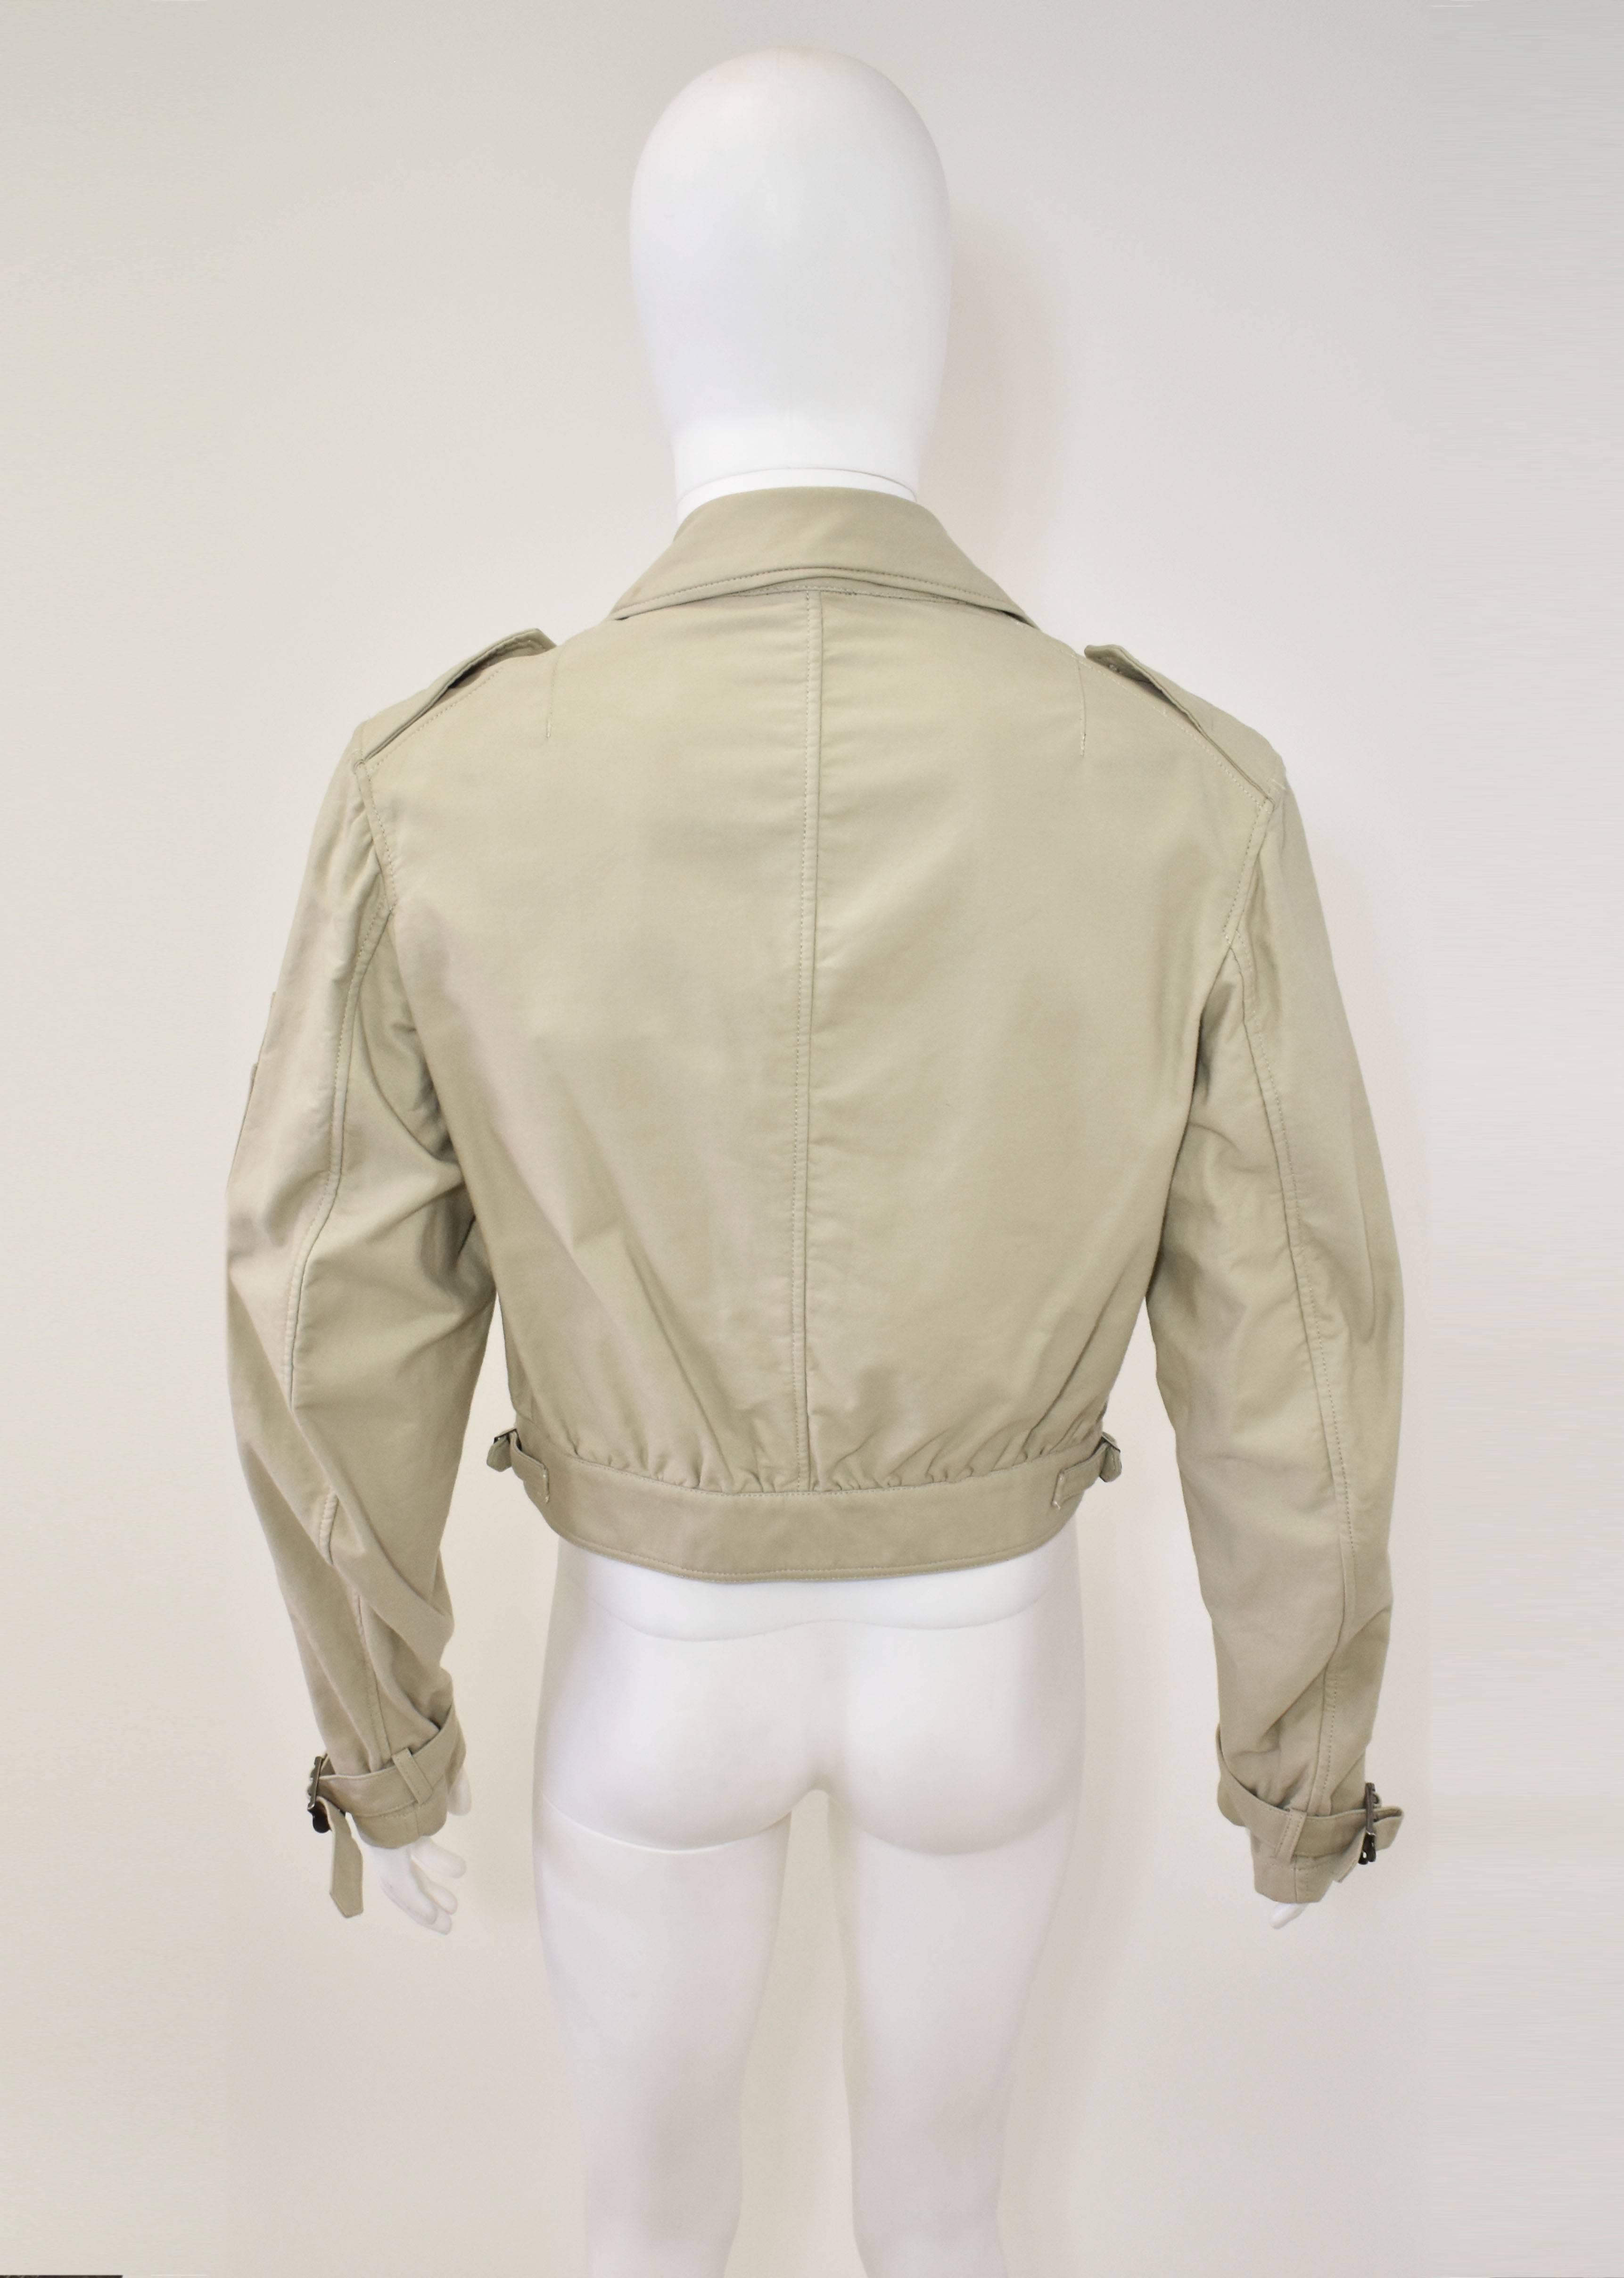 Men's Yohji Yamamoto Y’s Beige Cropped Safari Style Jacket 1980’s 